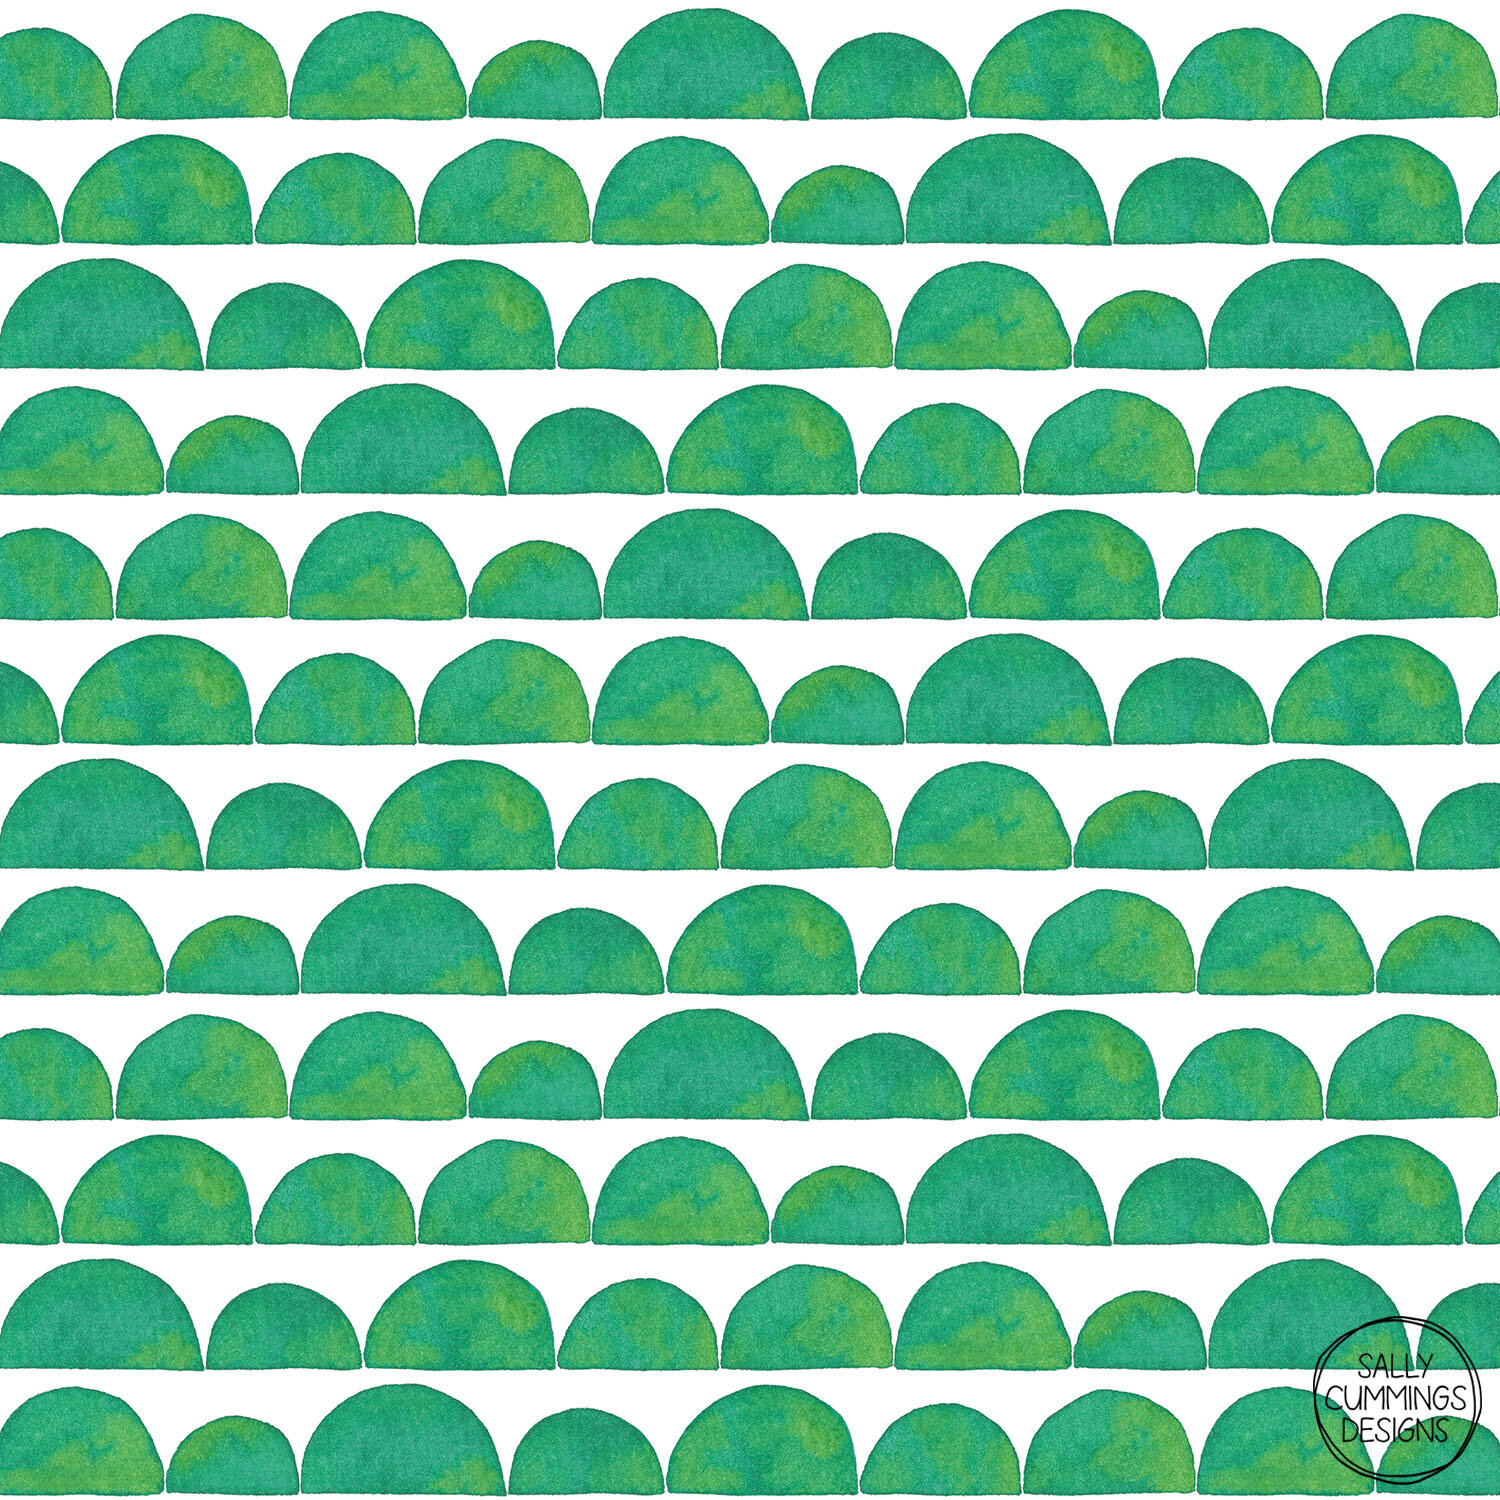 Sally Cummings Designs - Green Ink Wash Semi Circles Pattern